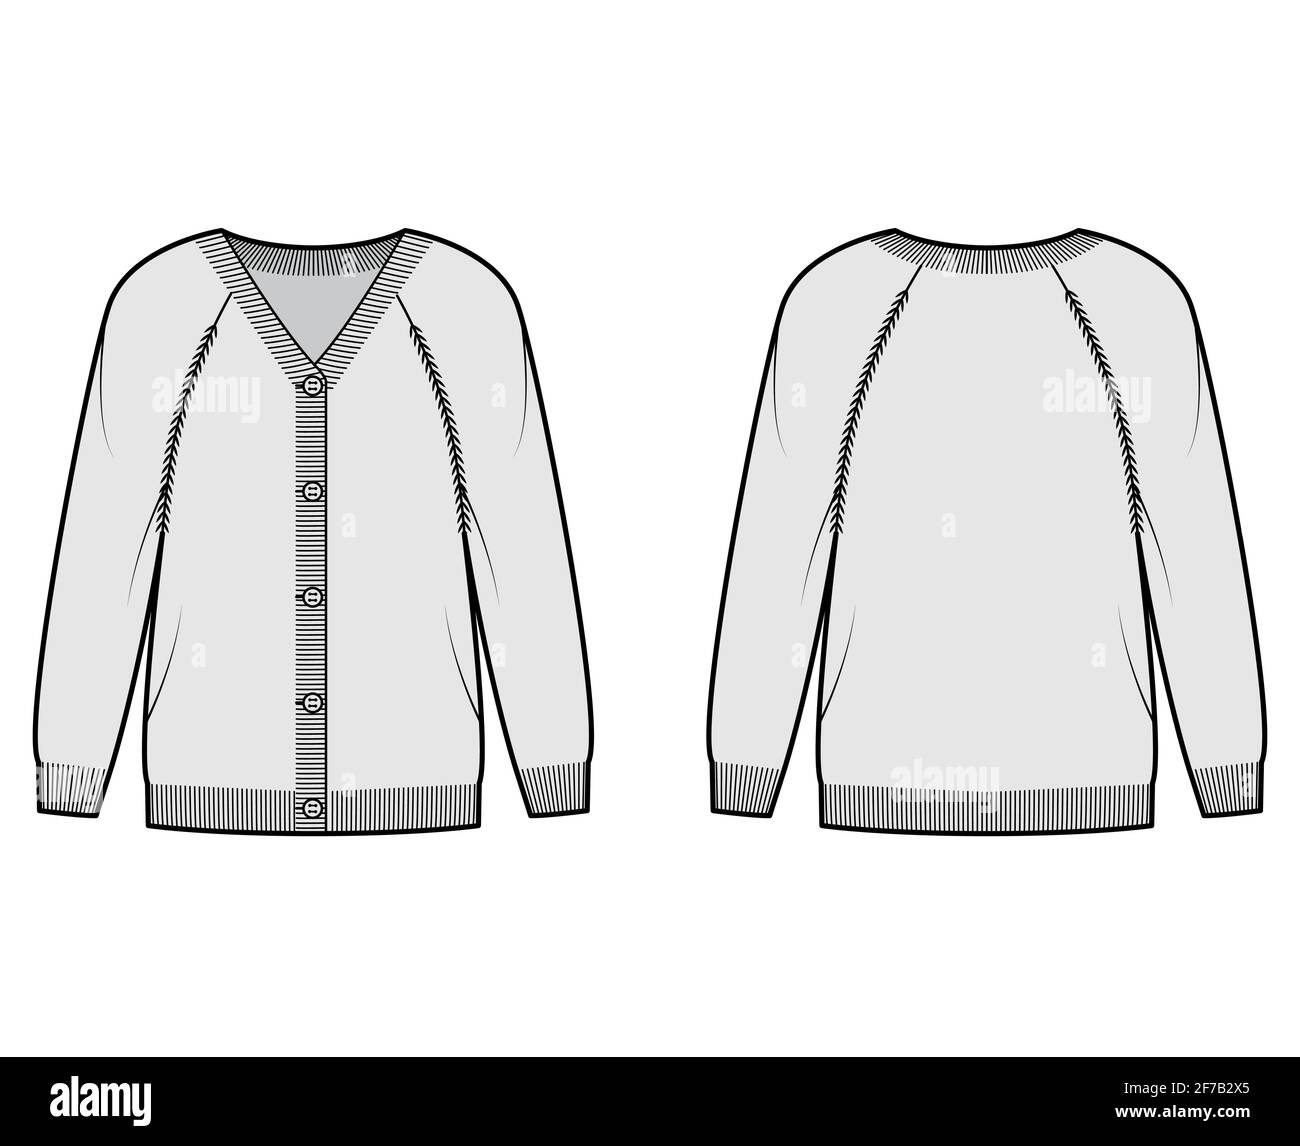 Sweater cardigan technical fashion illustration with V- neck, long ...